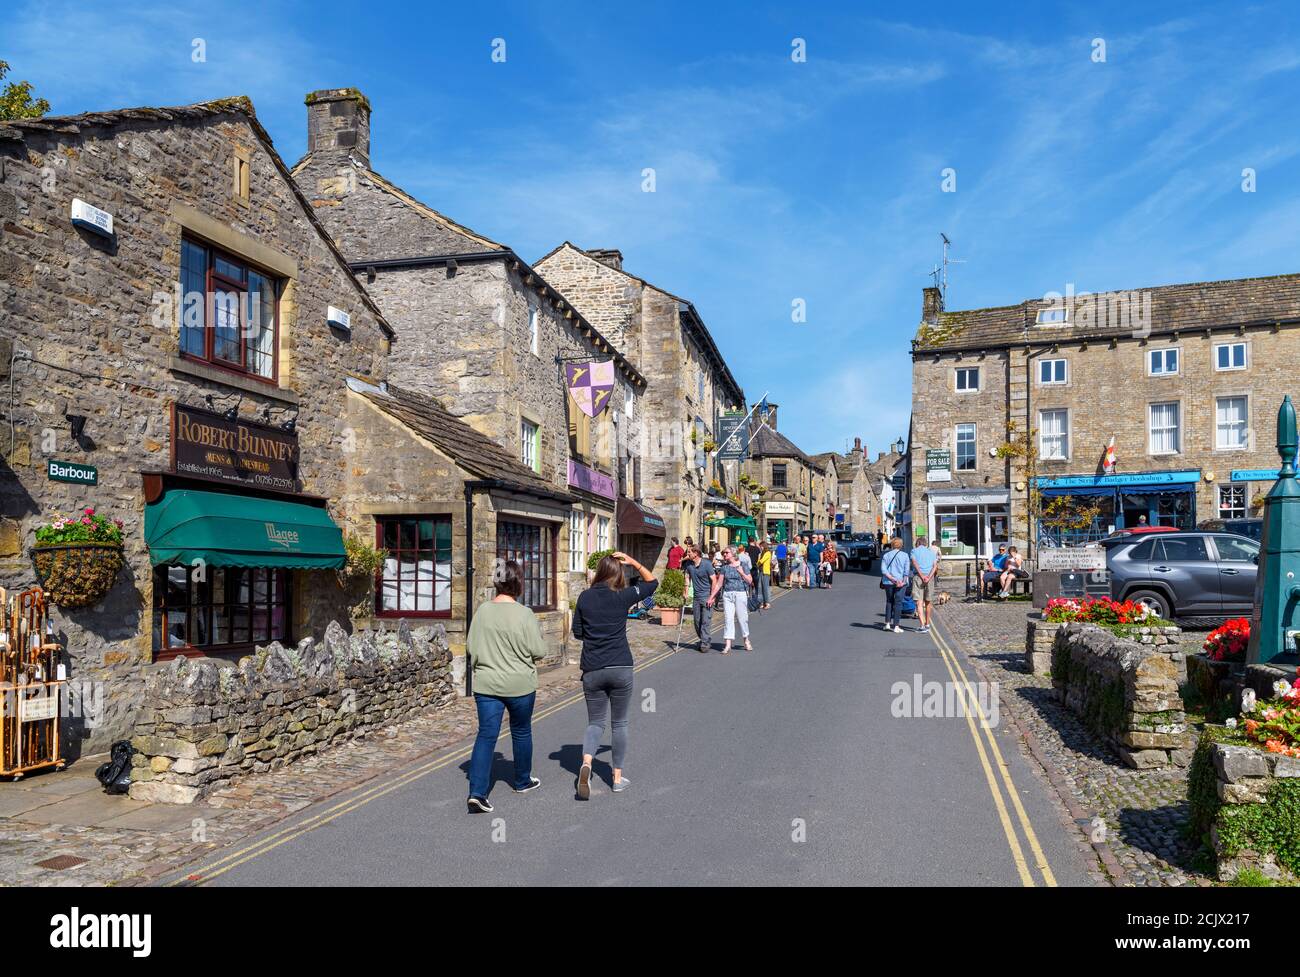 The Square and Main Street im traditionellen englischen Dorf Grassington, Yorkshire Dales National Park, North Yorkshire, England, Großbritannien. Stockfoto